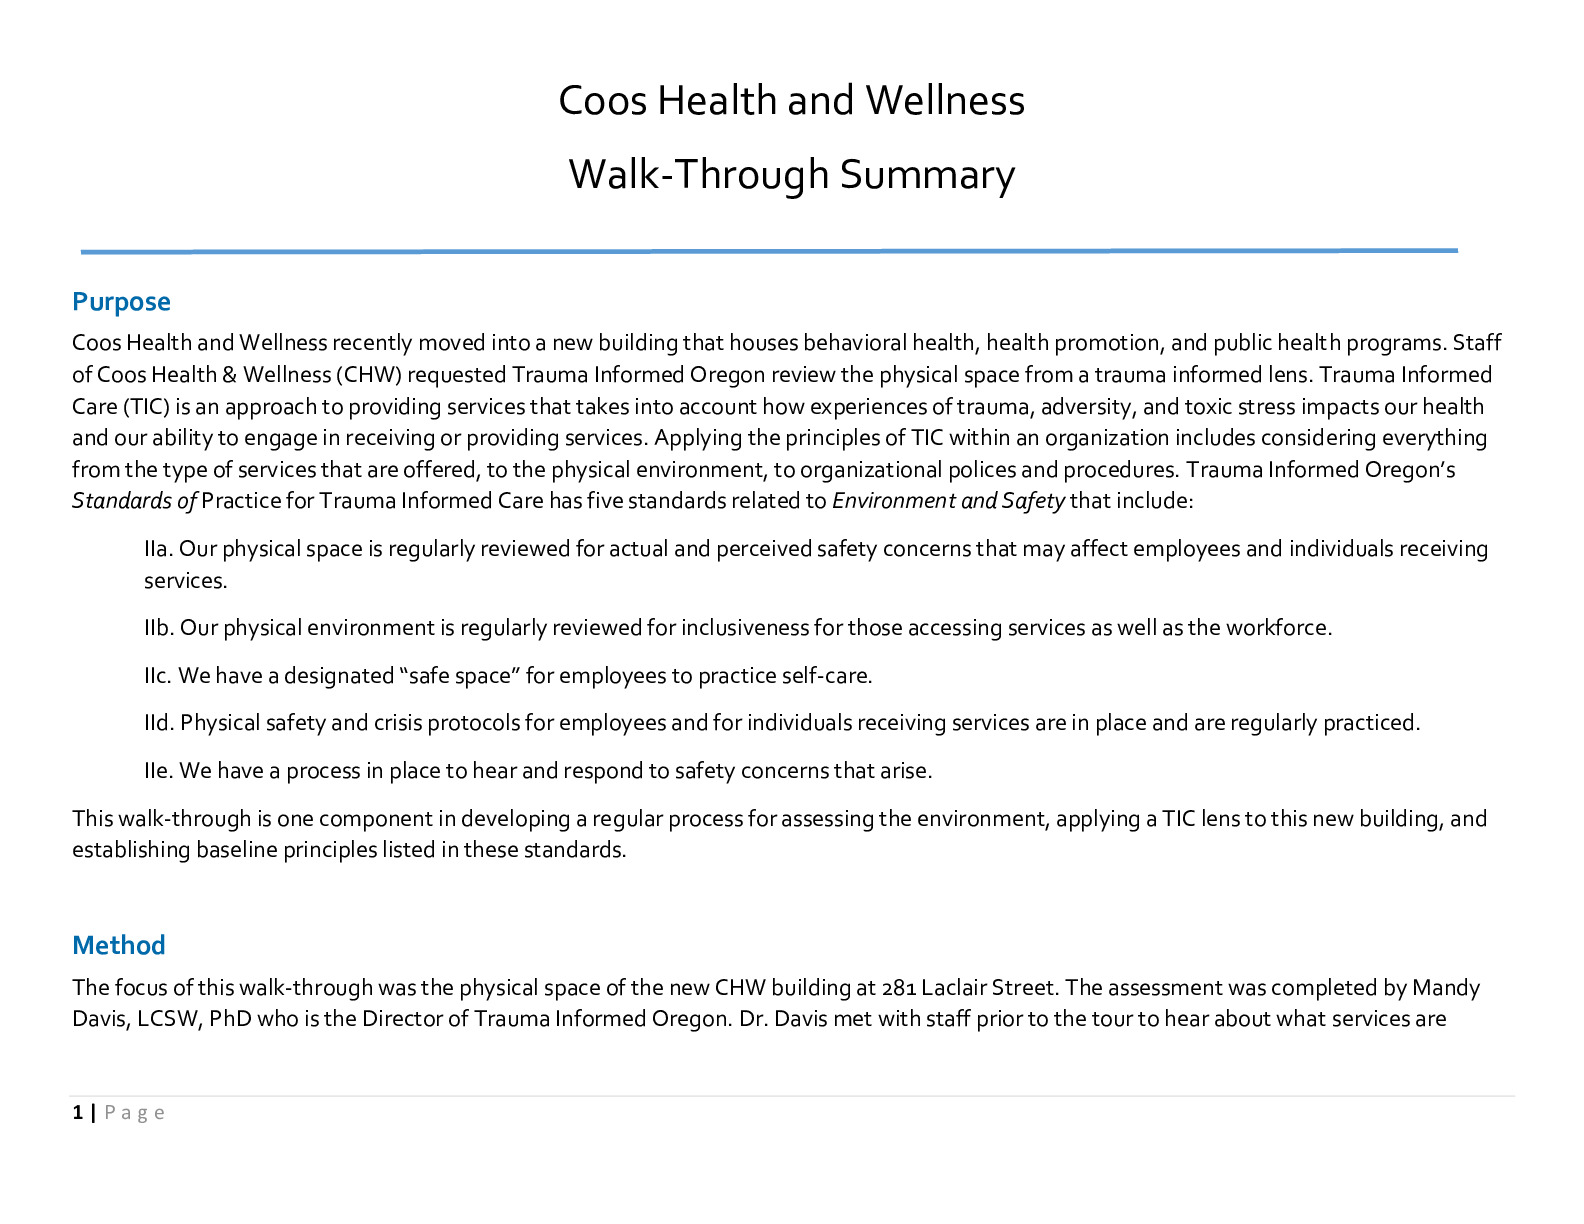 Coos Health and Wellness - walk through summary